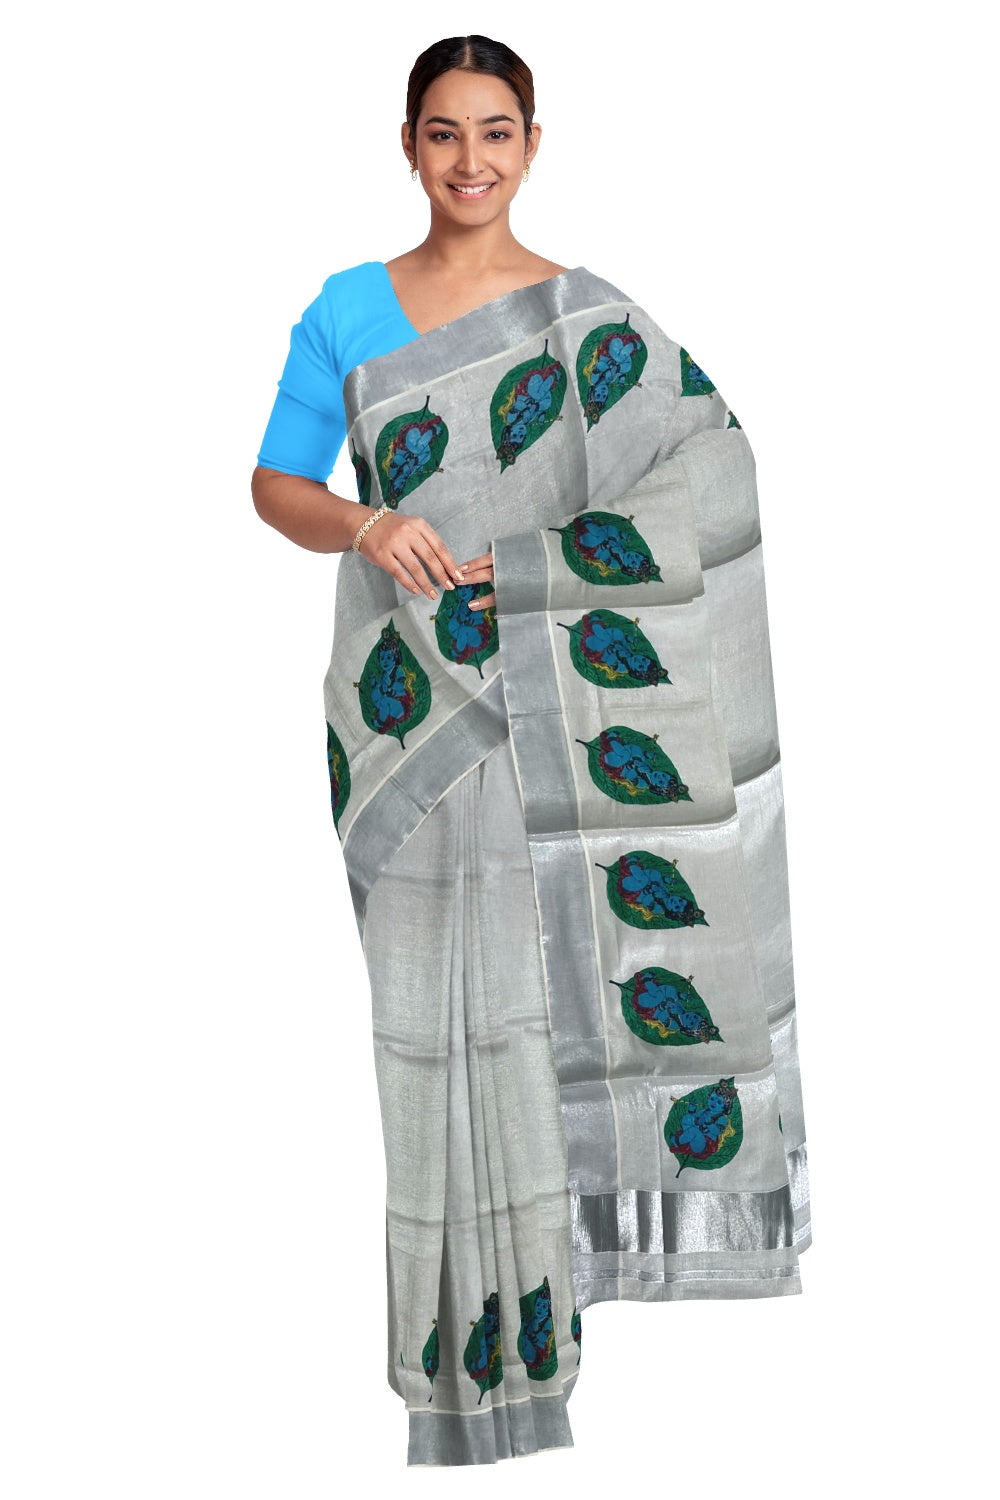 Kerala Silver Tissue Kasavu Onam Saree with Baby Krishna Design